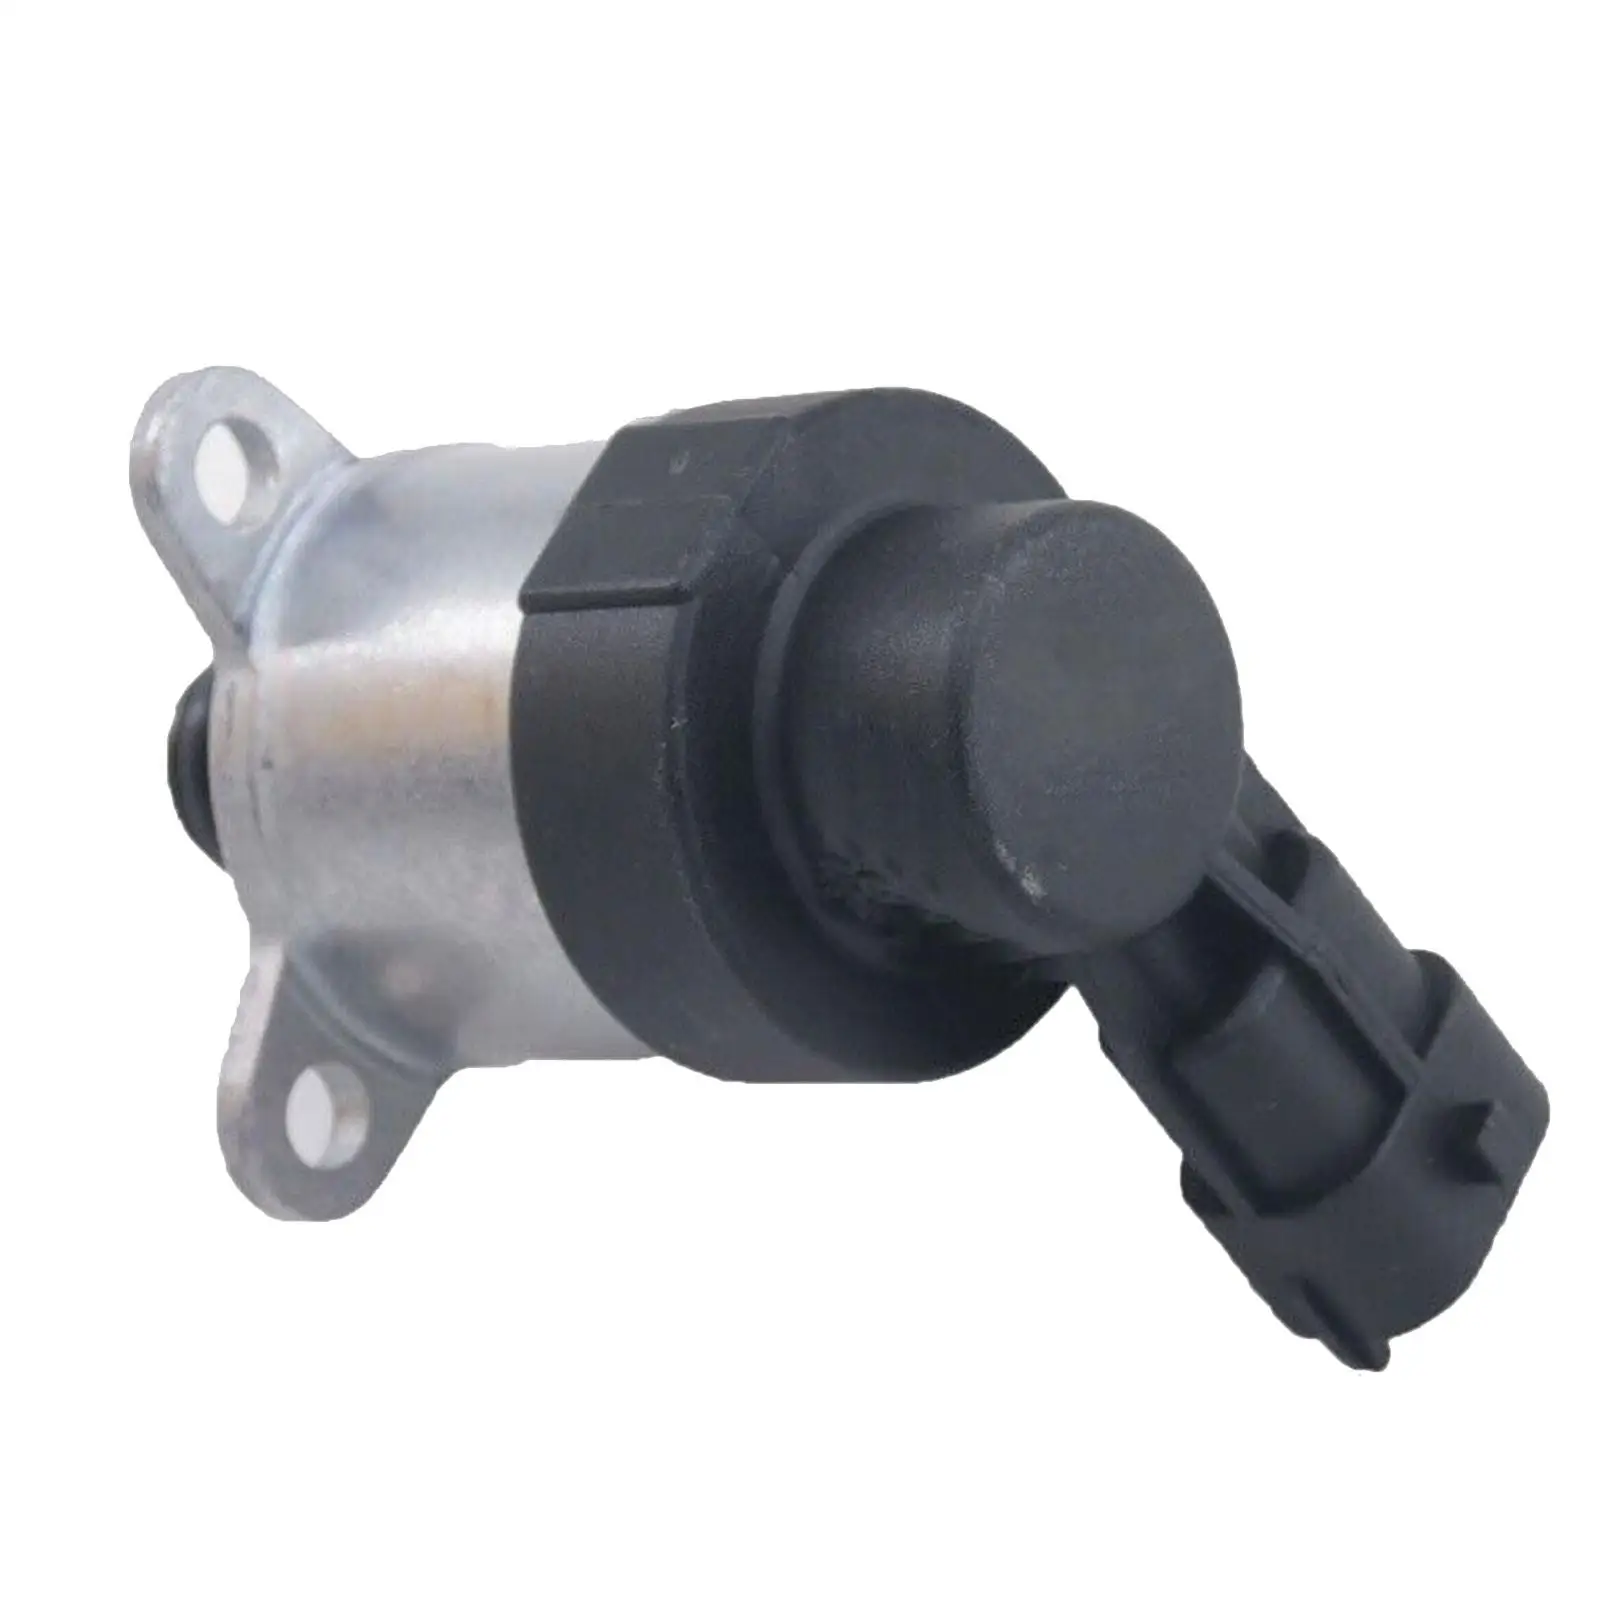 Fuel Injection Pump Pressure Regulator Fuel Control Actuator 0928400742 for Fiat Durable Auto Accessories Easy Installation